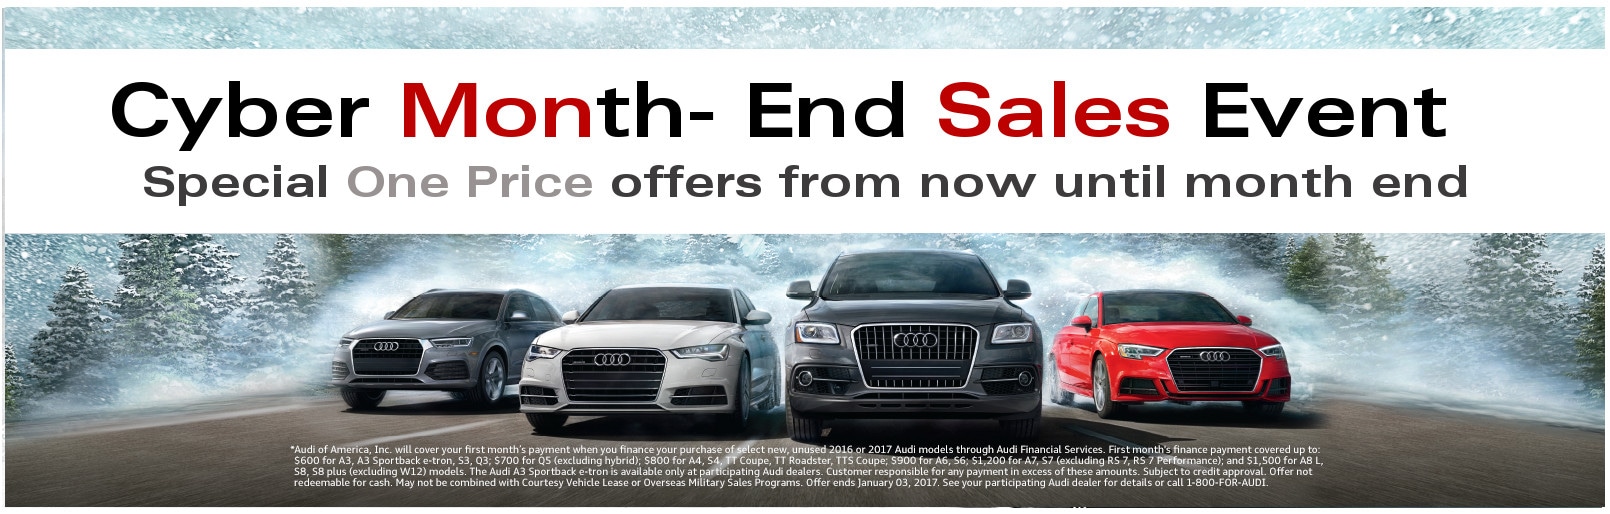 2015 Black Friday Car Deals Audi Atlanta GA offers Special Savings on